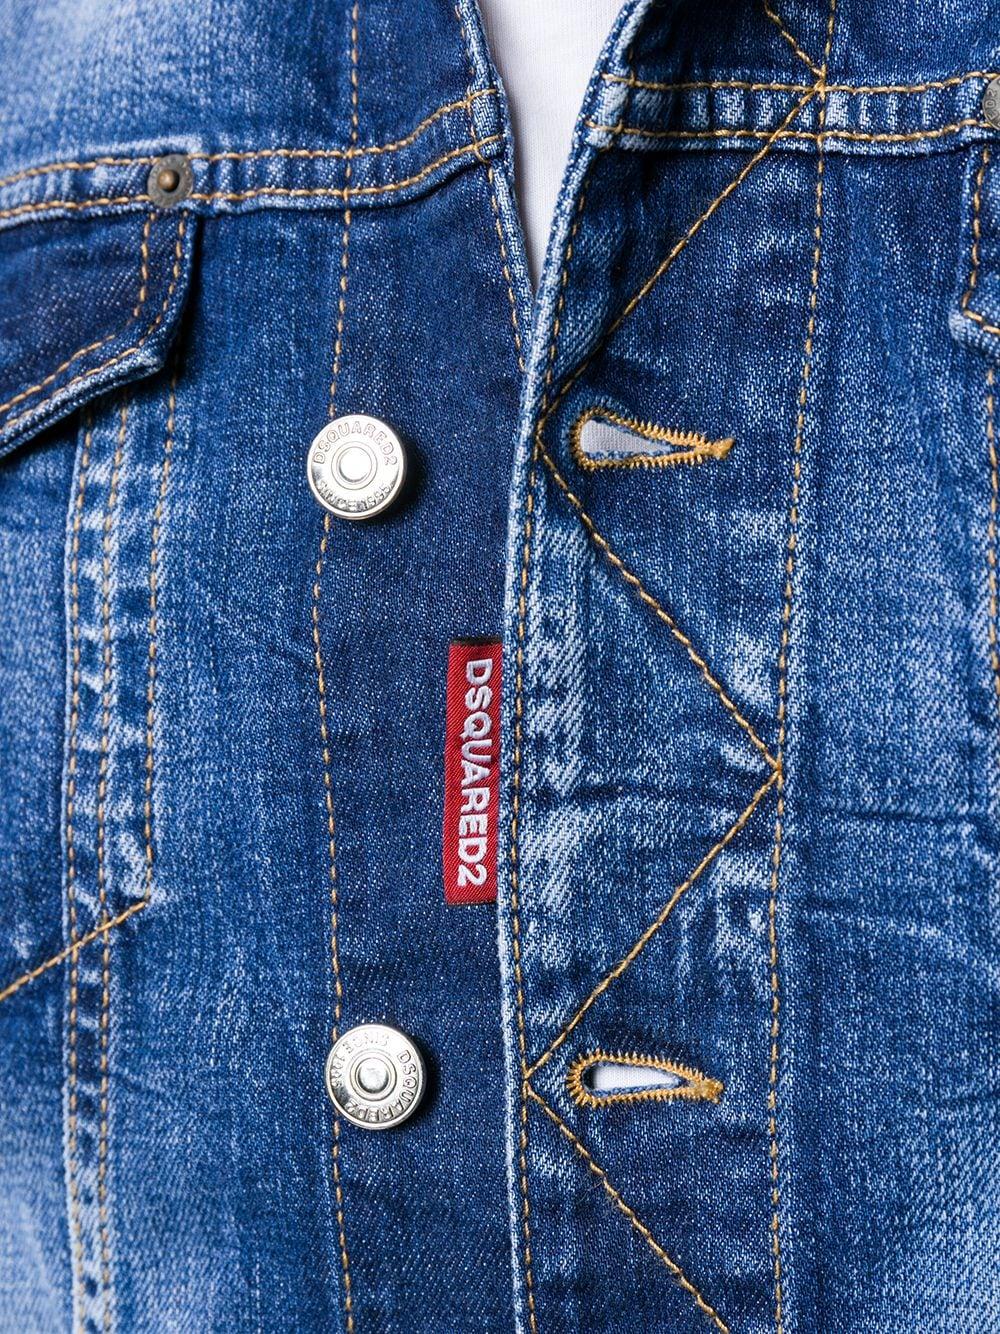 DSquared² Icon Logo Denim Jacket in Blue for Men - Save 40% | Lyst